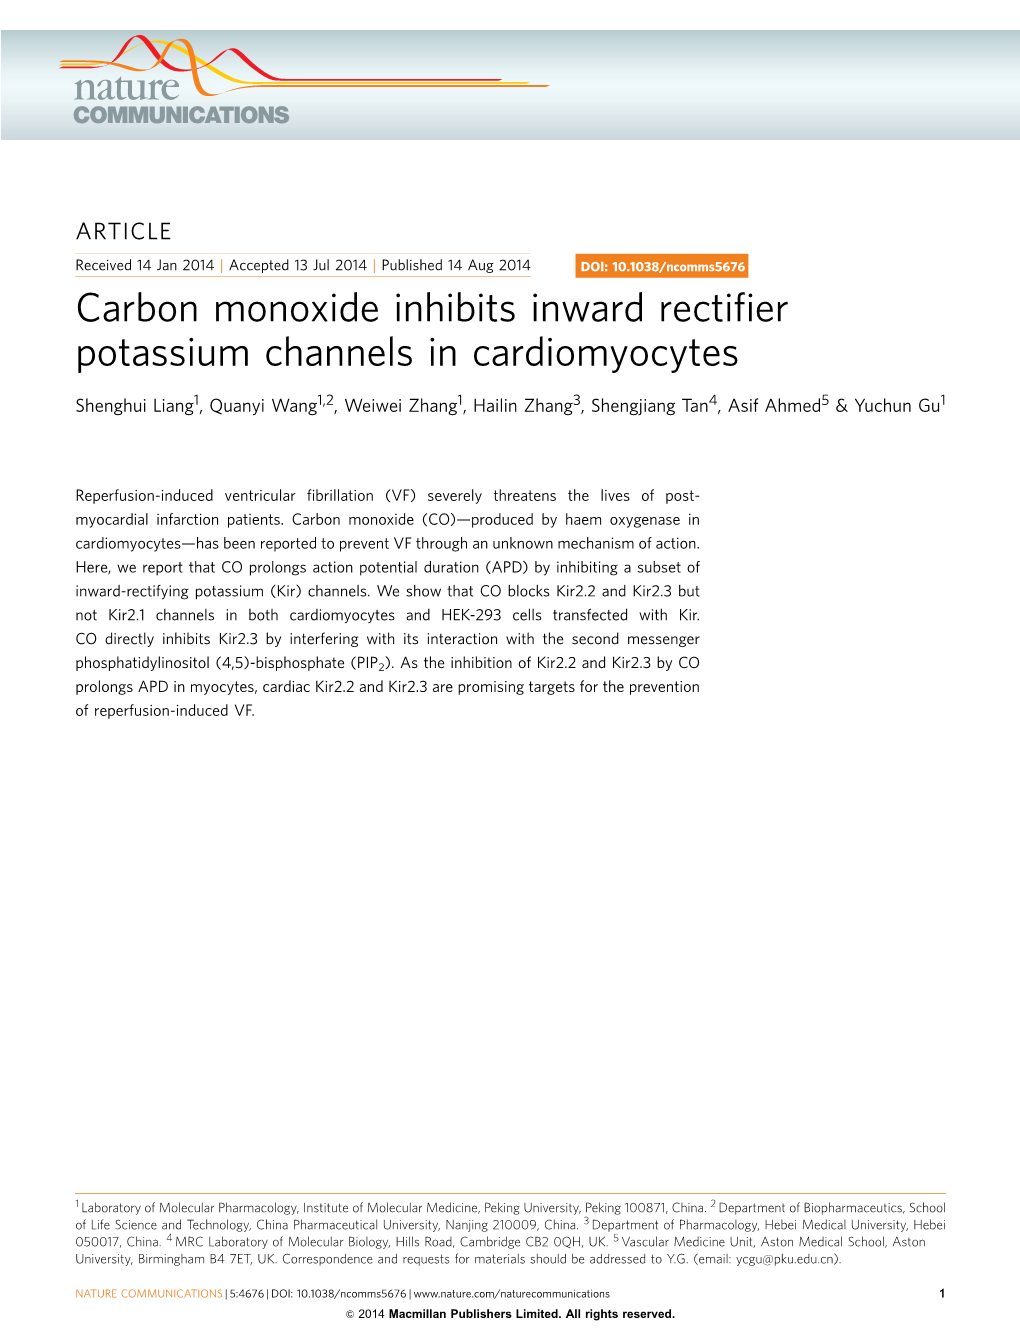 Carbon Monoxide Inhibits Inward Rectifier Potassium Channels In